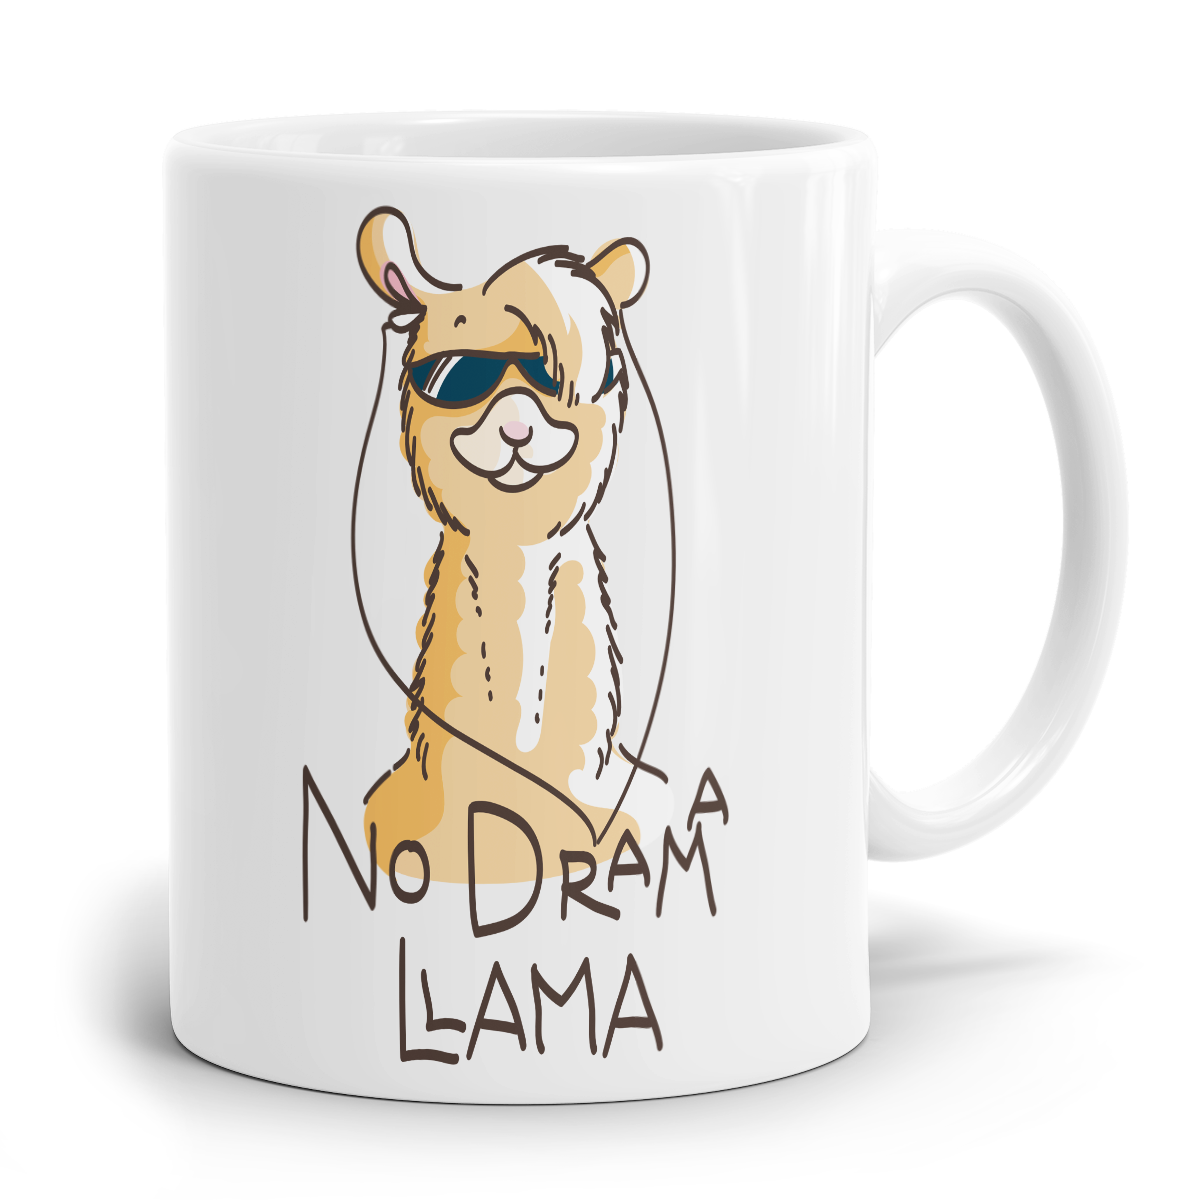 Lama Tasse - No Drama Lama